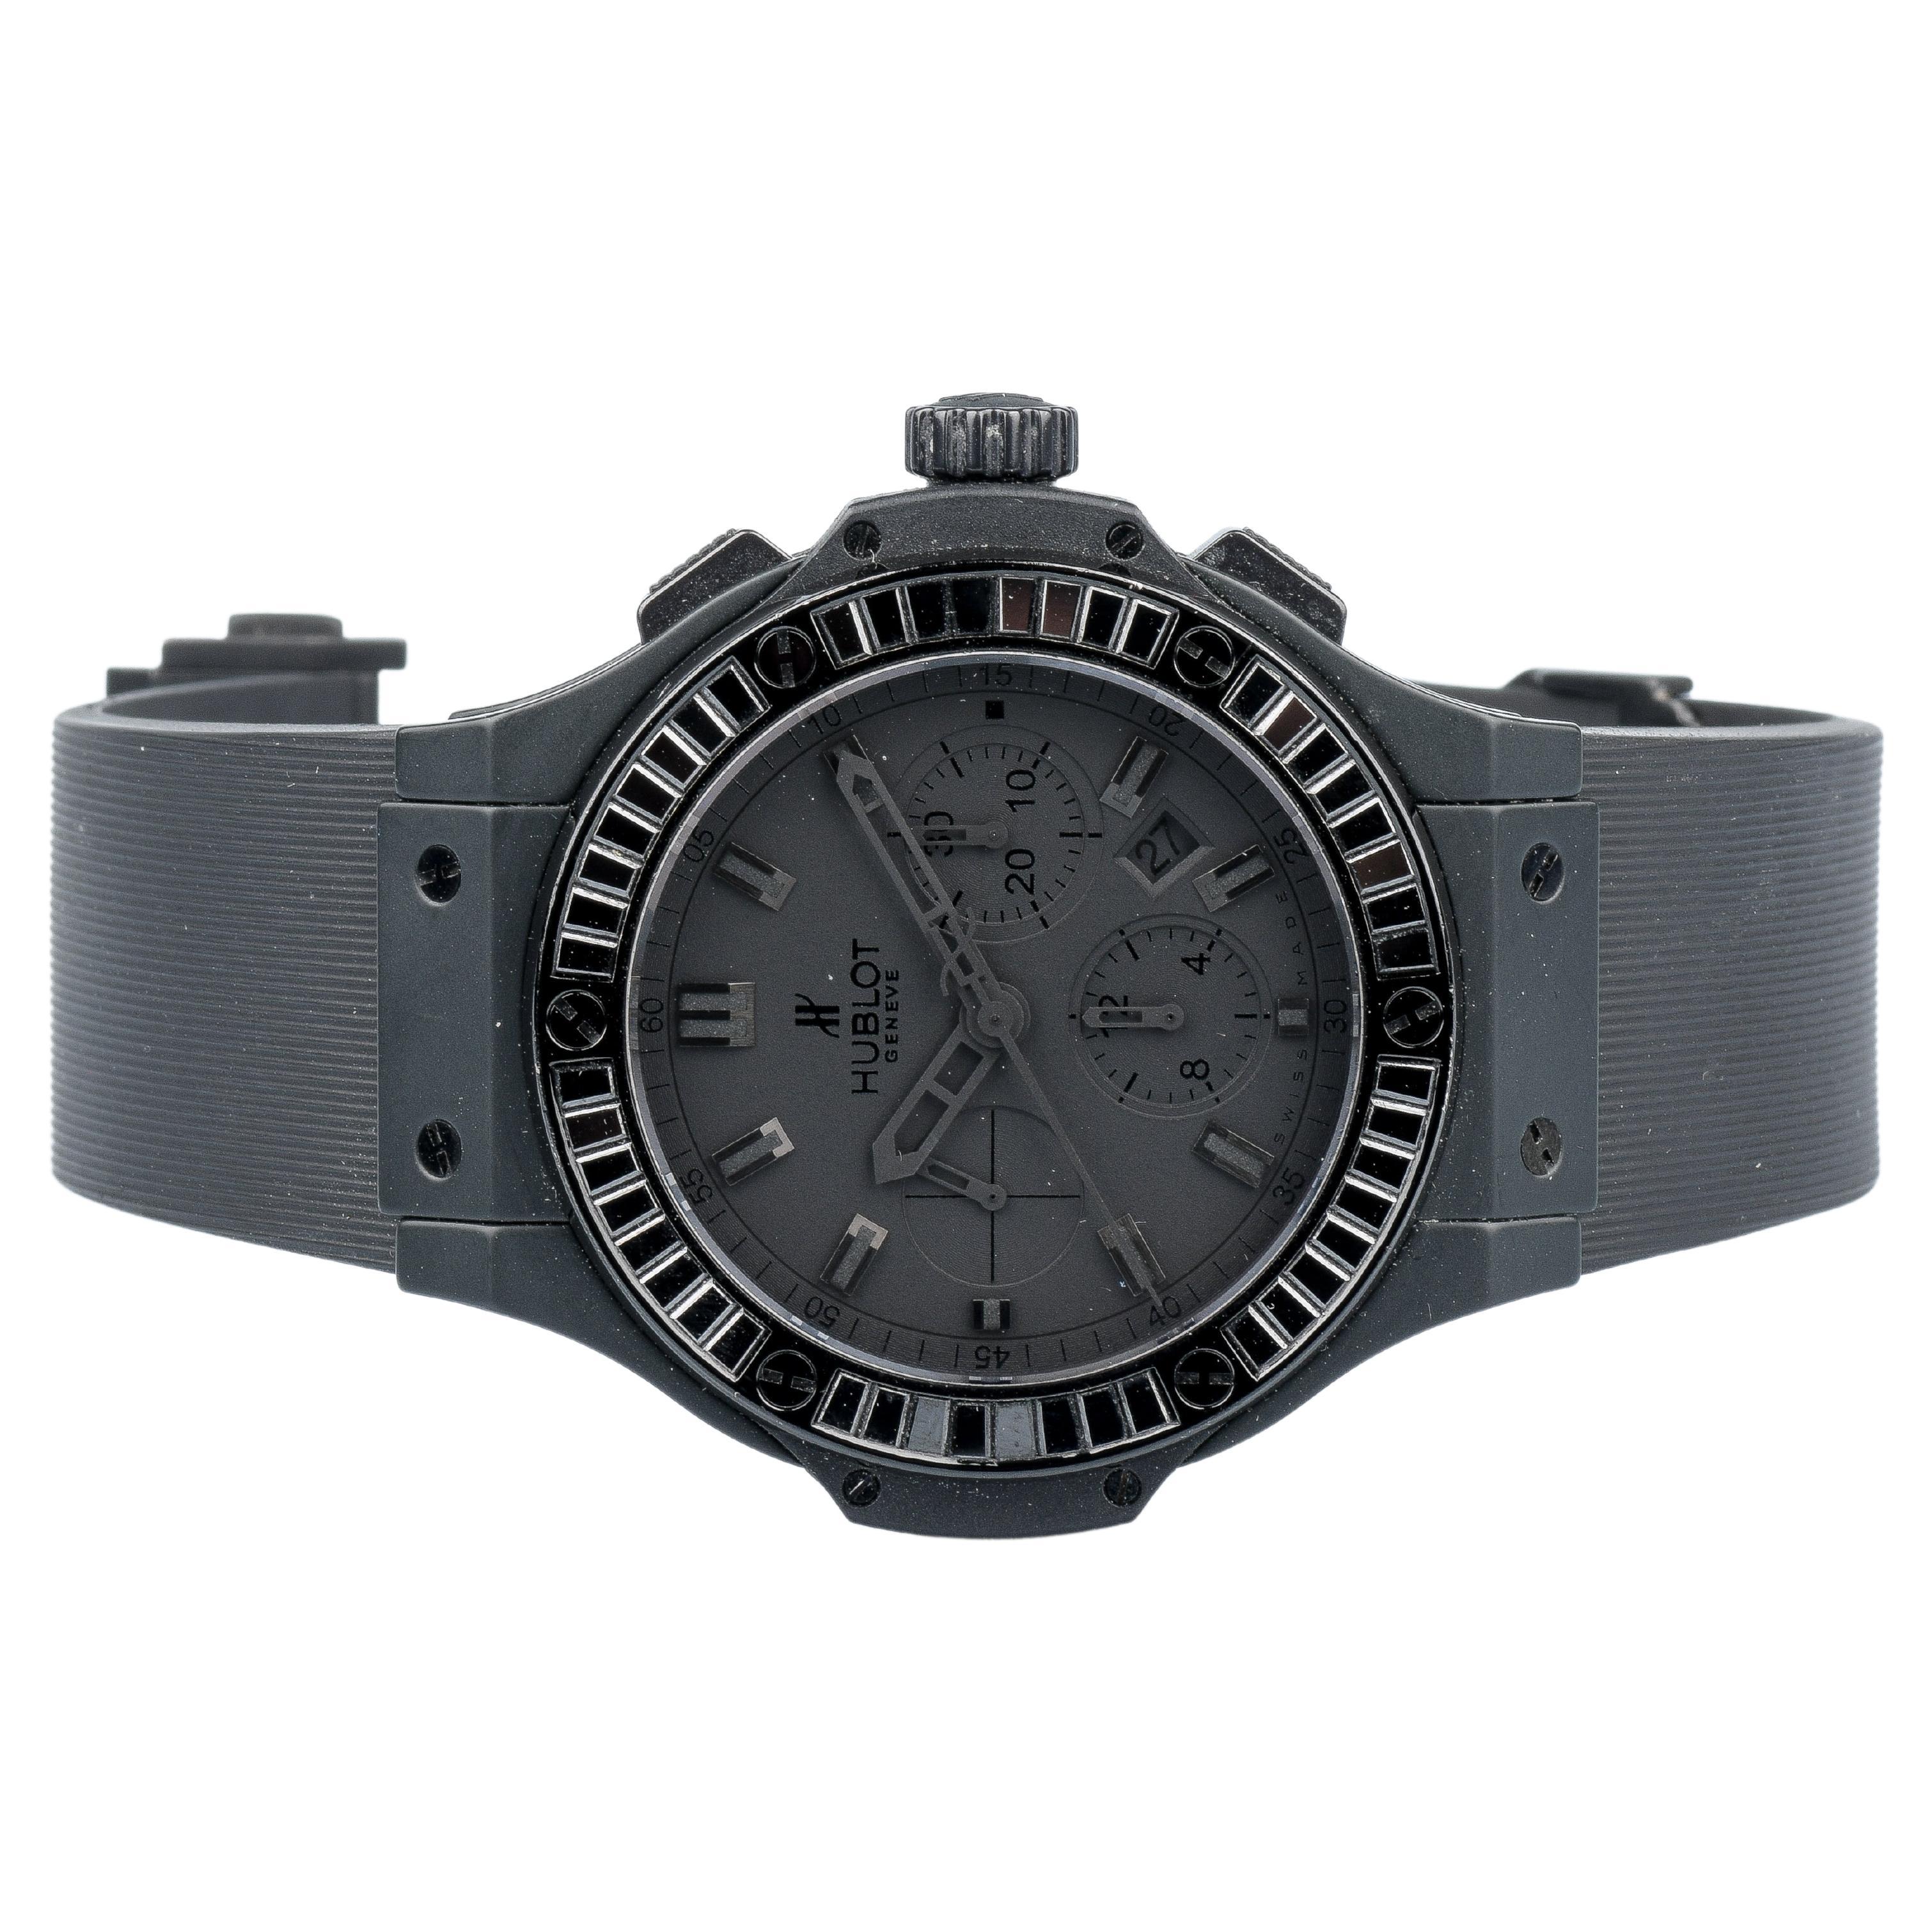 Hublot Big Bang All Black Chronograph black ceramic watch